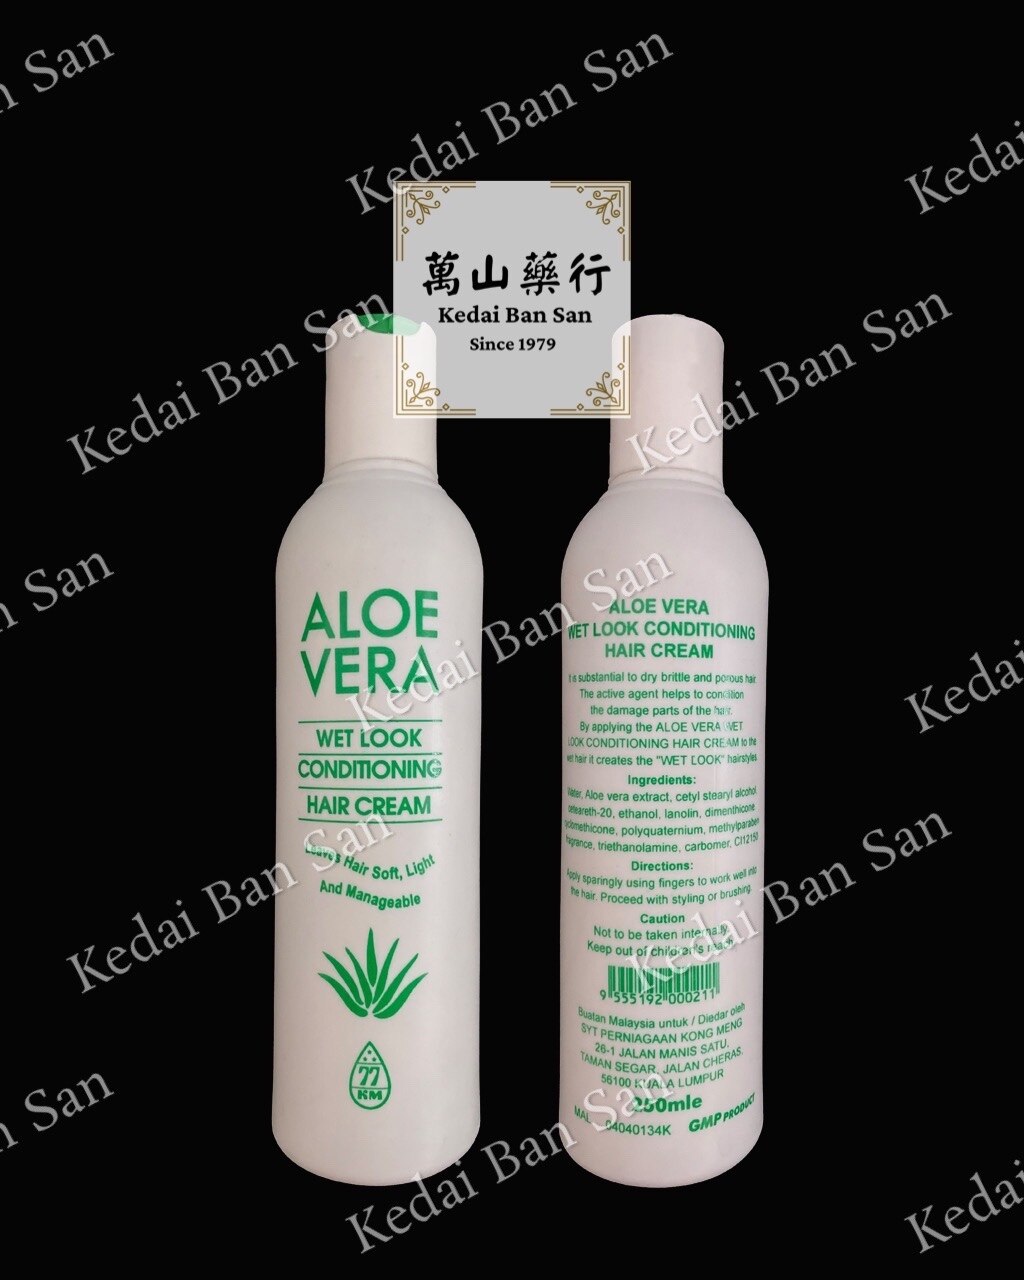 77 KM) Aloe Vera Wet Look Conditioning Hair Cream (250ml) | Lazada